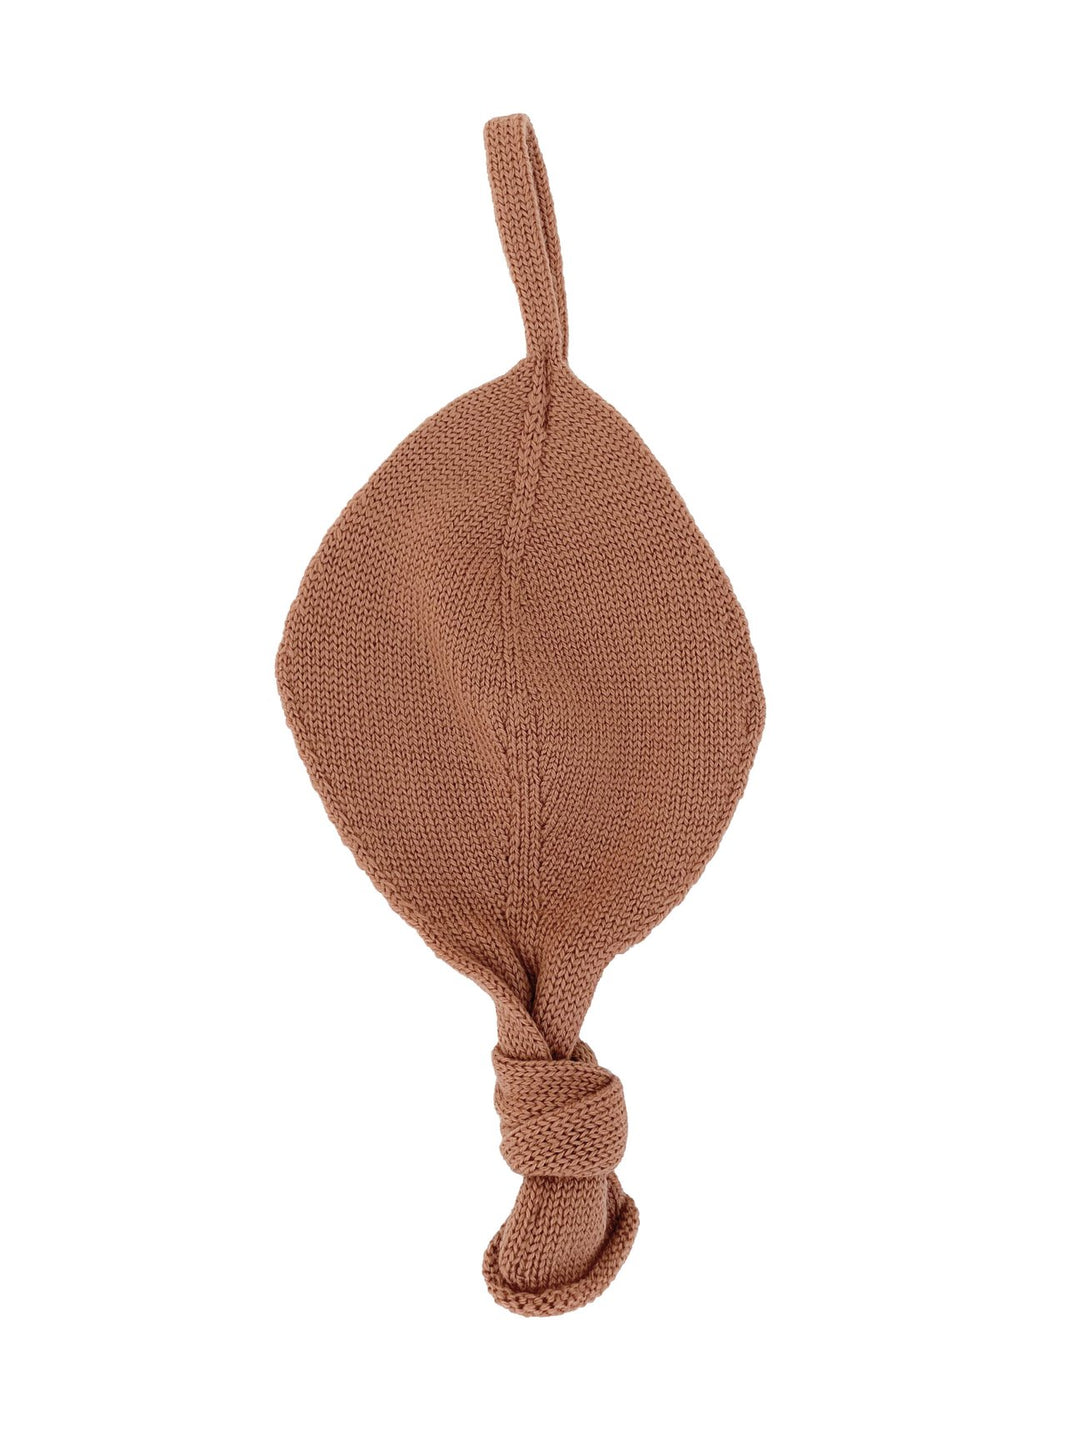 HVID knitwear Brick brown pink merino wool dummy pacifier Ttiti comforter chain accessory 